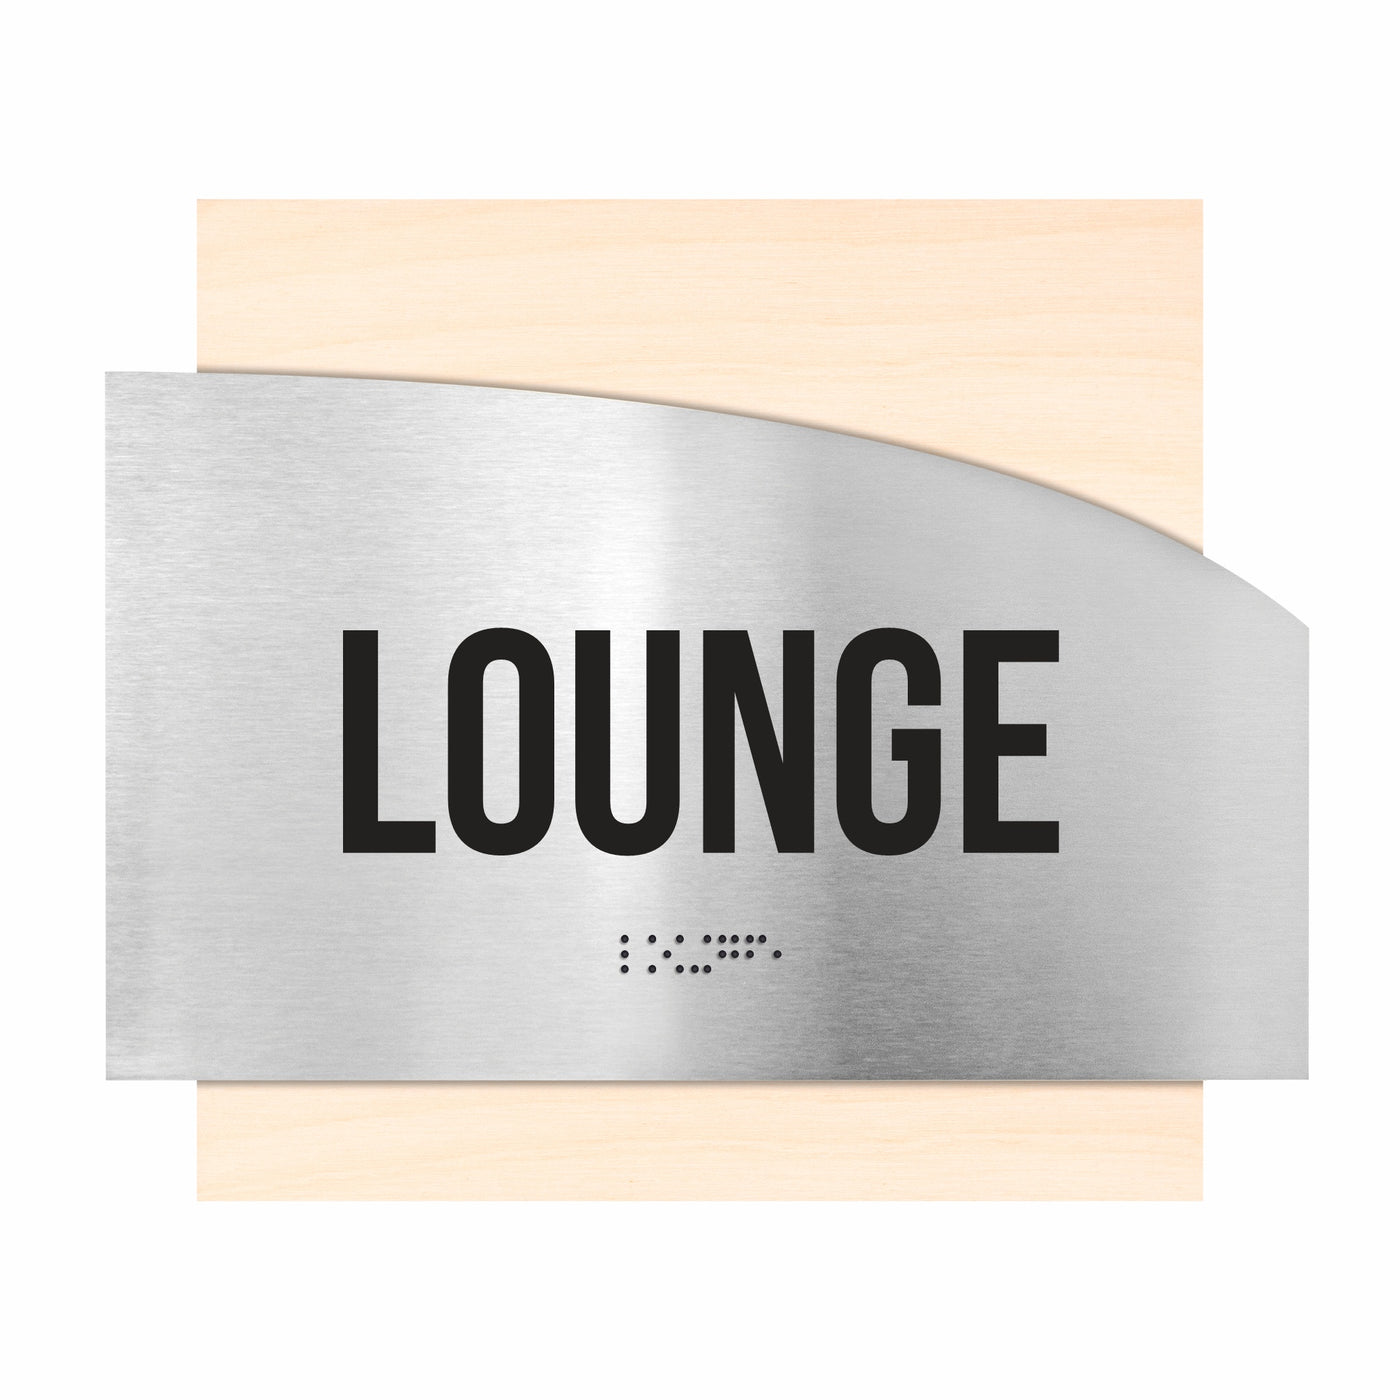 Door Signs - Lounge Room Signs - Stainless Steel & Wood Plate - "Wave" Design